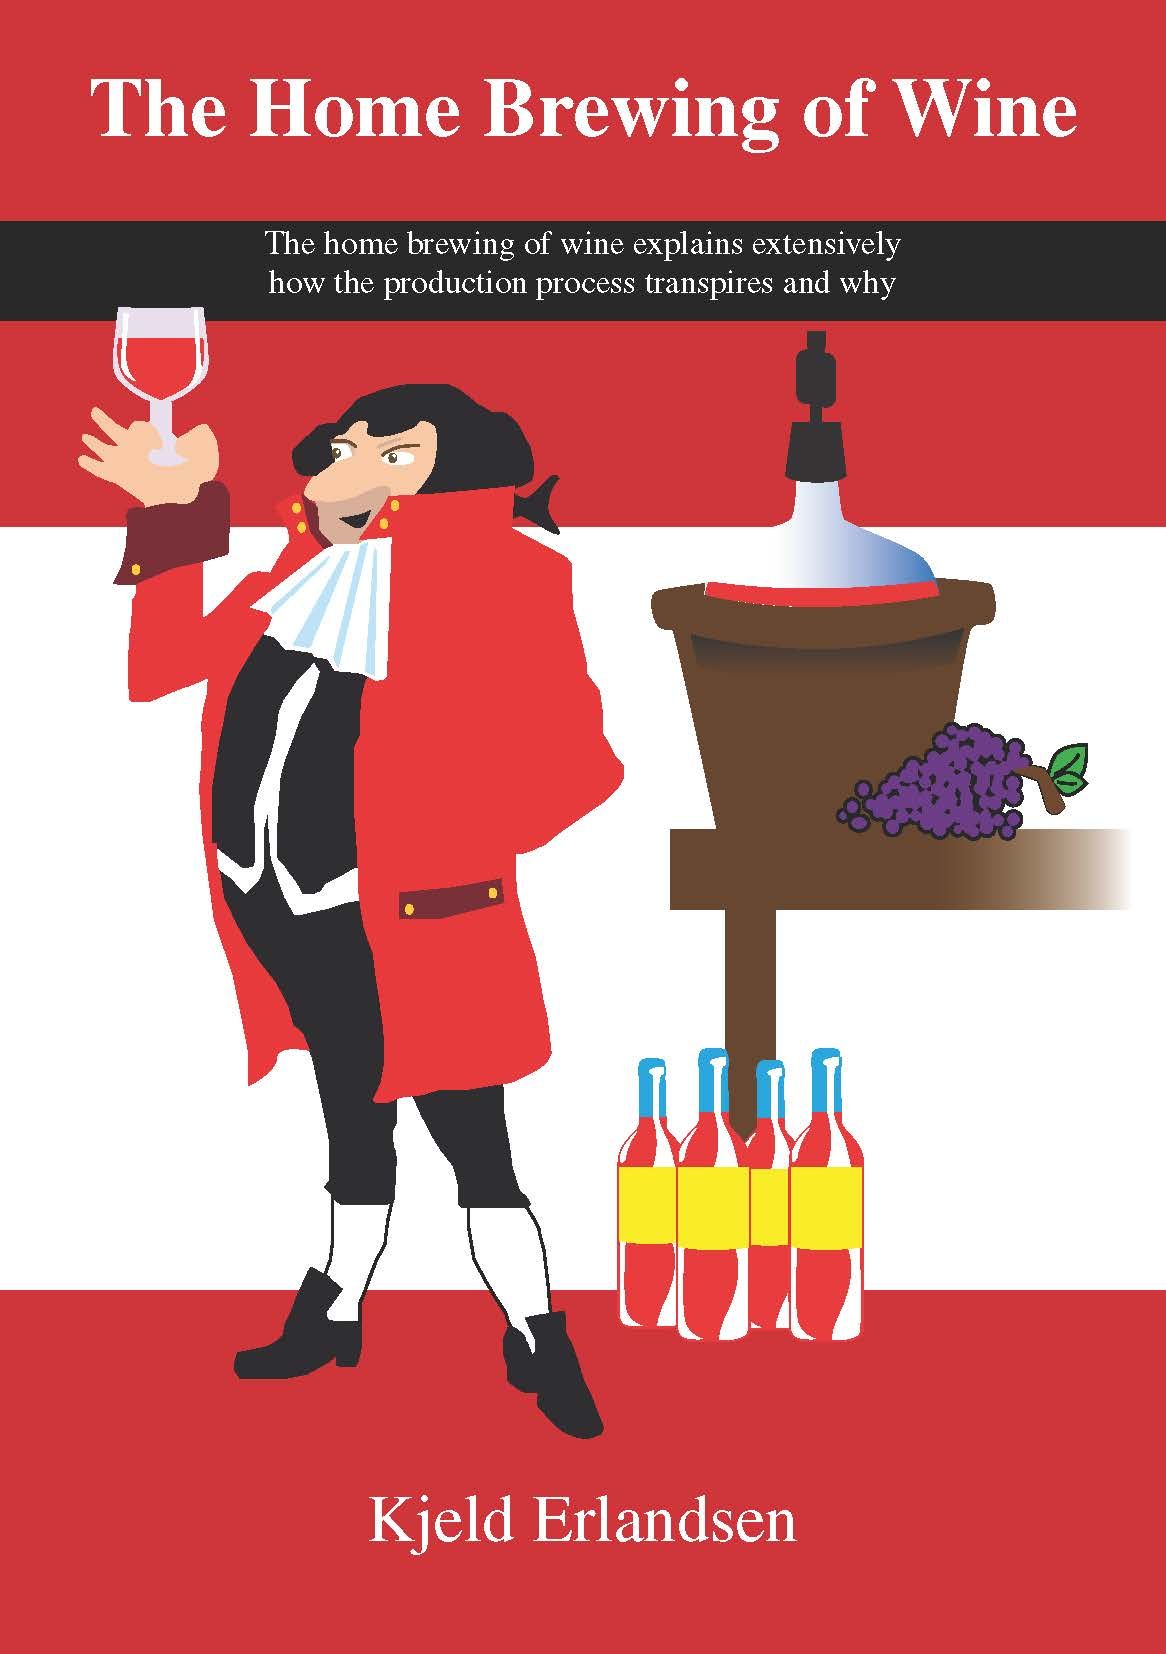 The Home Brewing of Wine, eBook by Kjeld Erlandsen